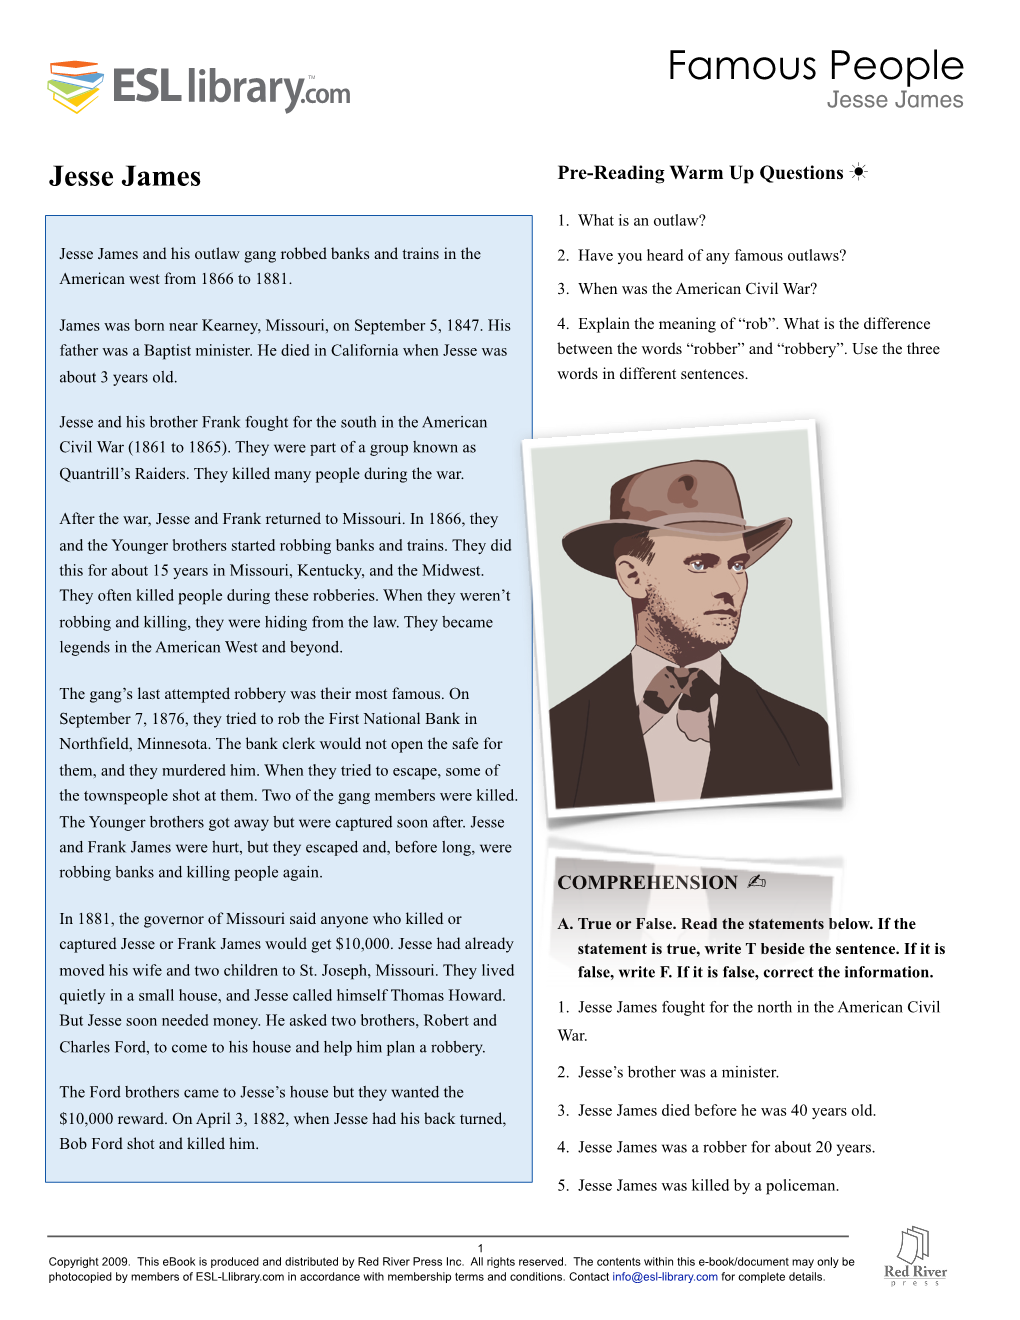 Famous People Jesse James